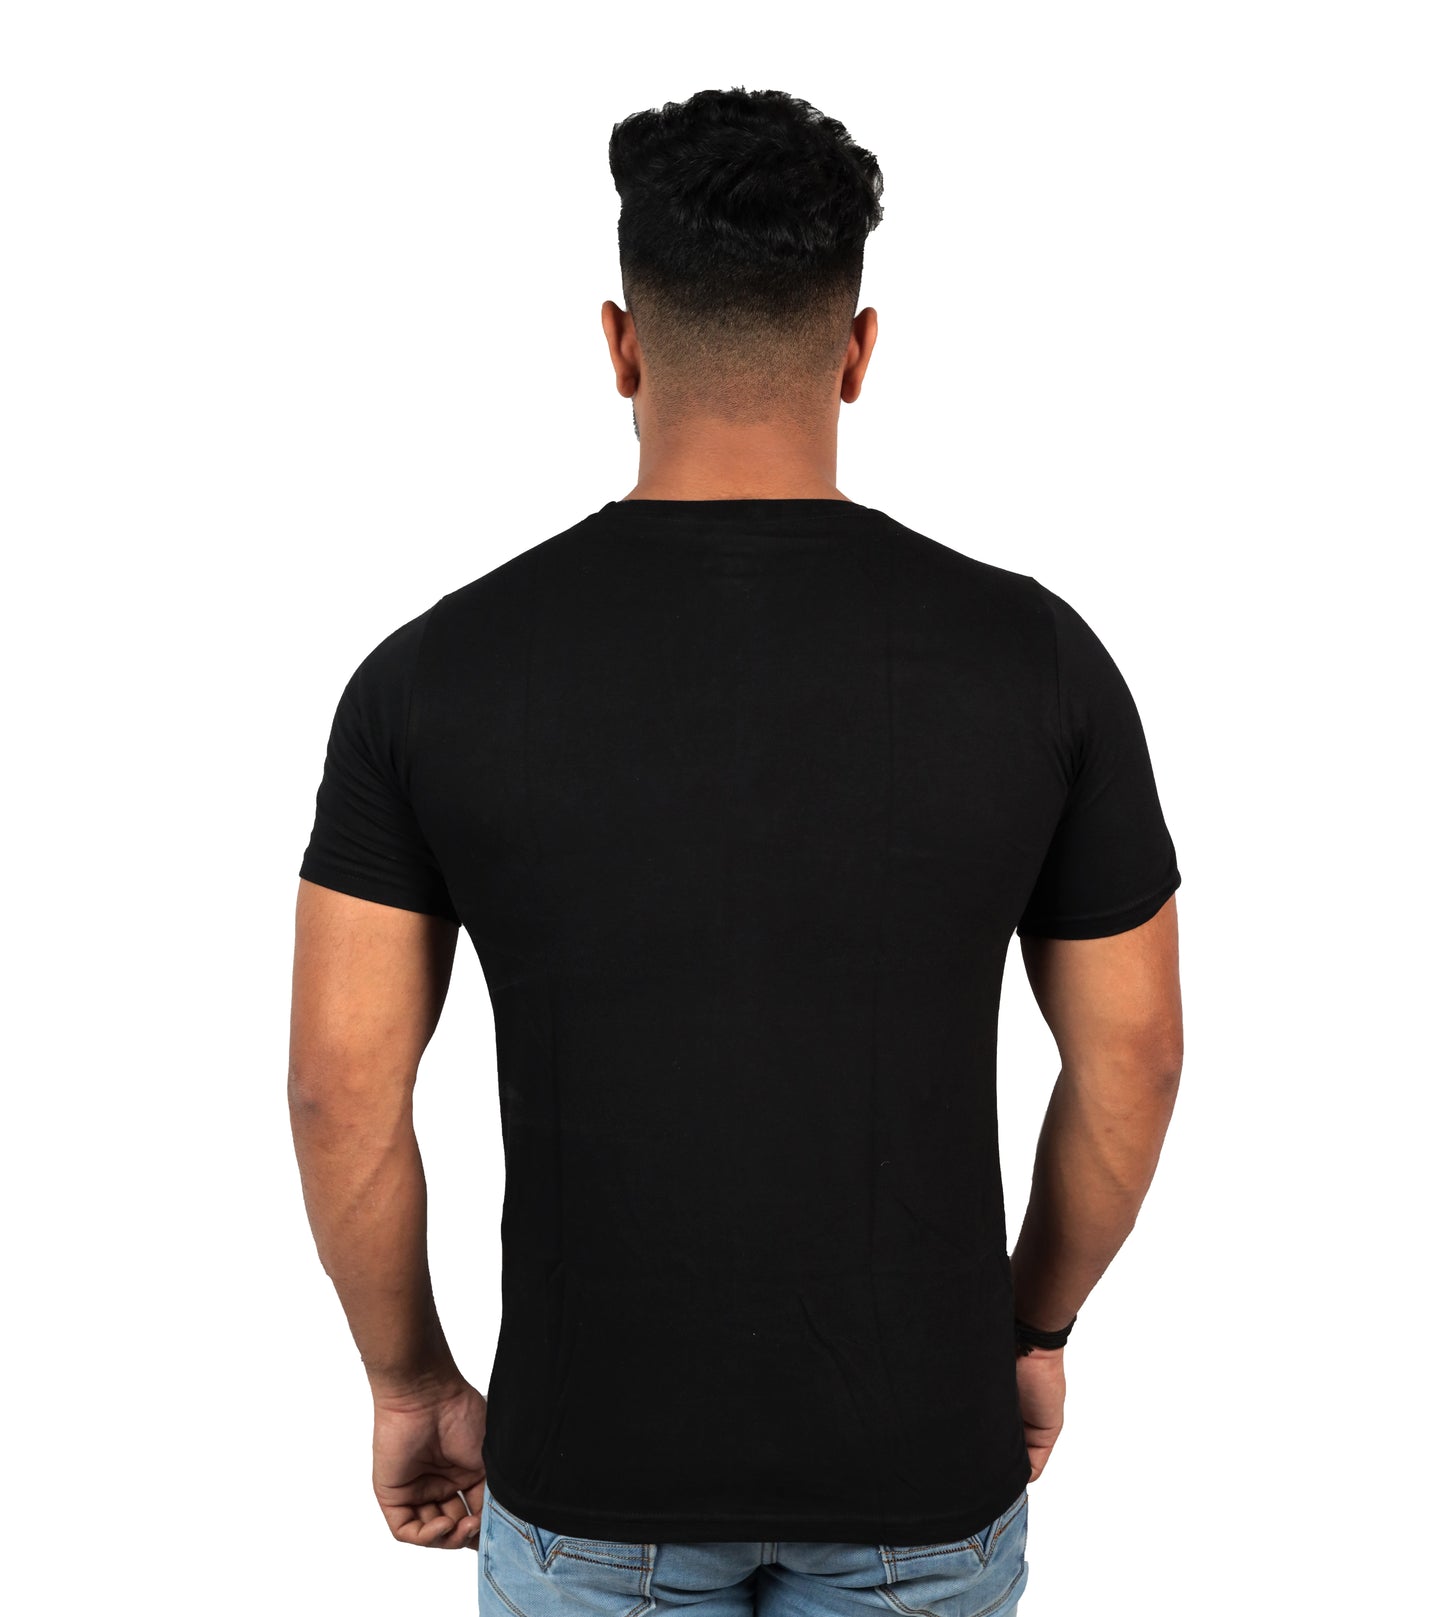 Ancient Hammerhead Shark T-Shirt In Black Color For Men